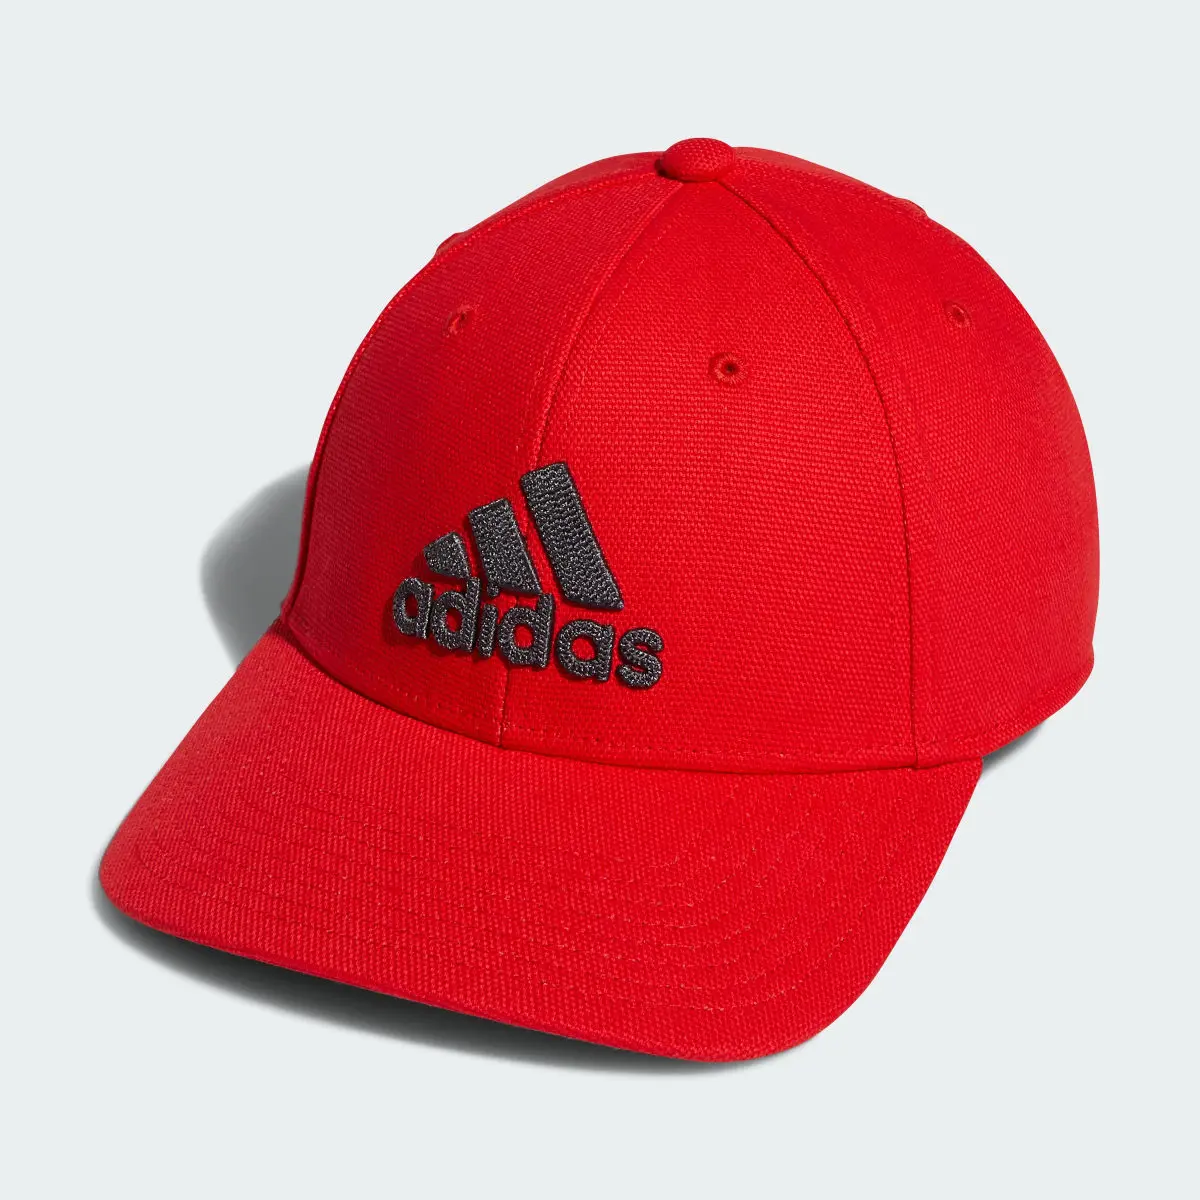 Adidas Producer Stretch Fit Hat. 2